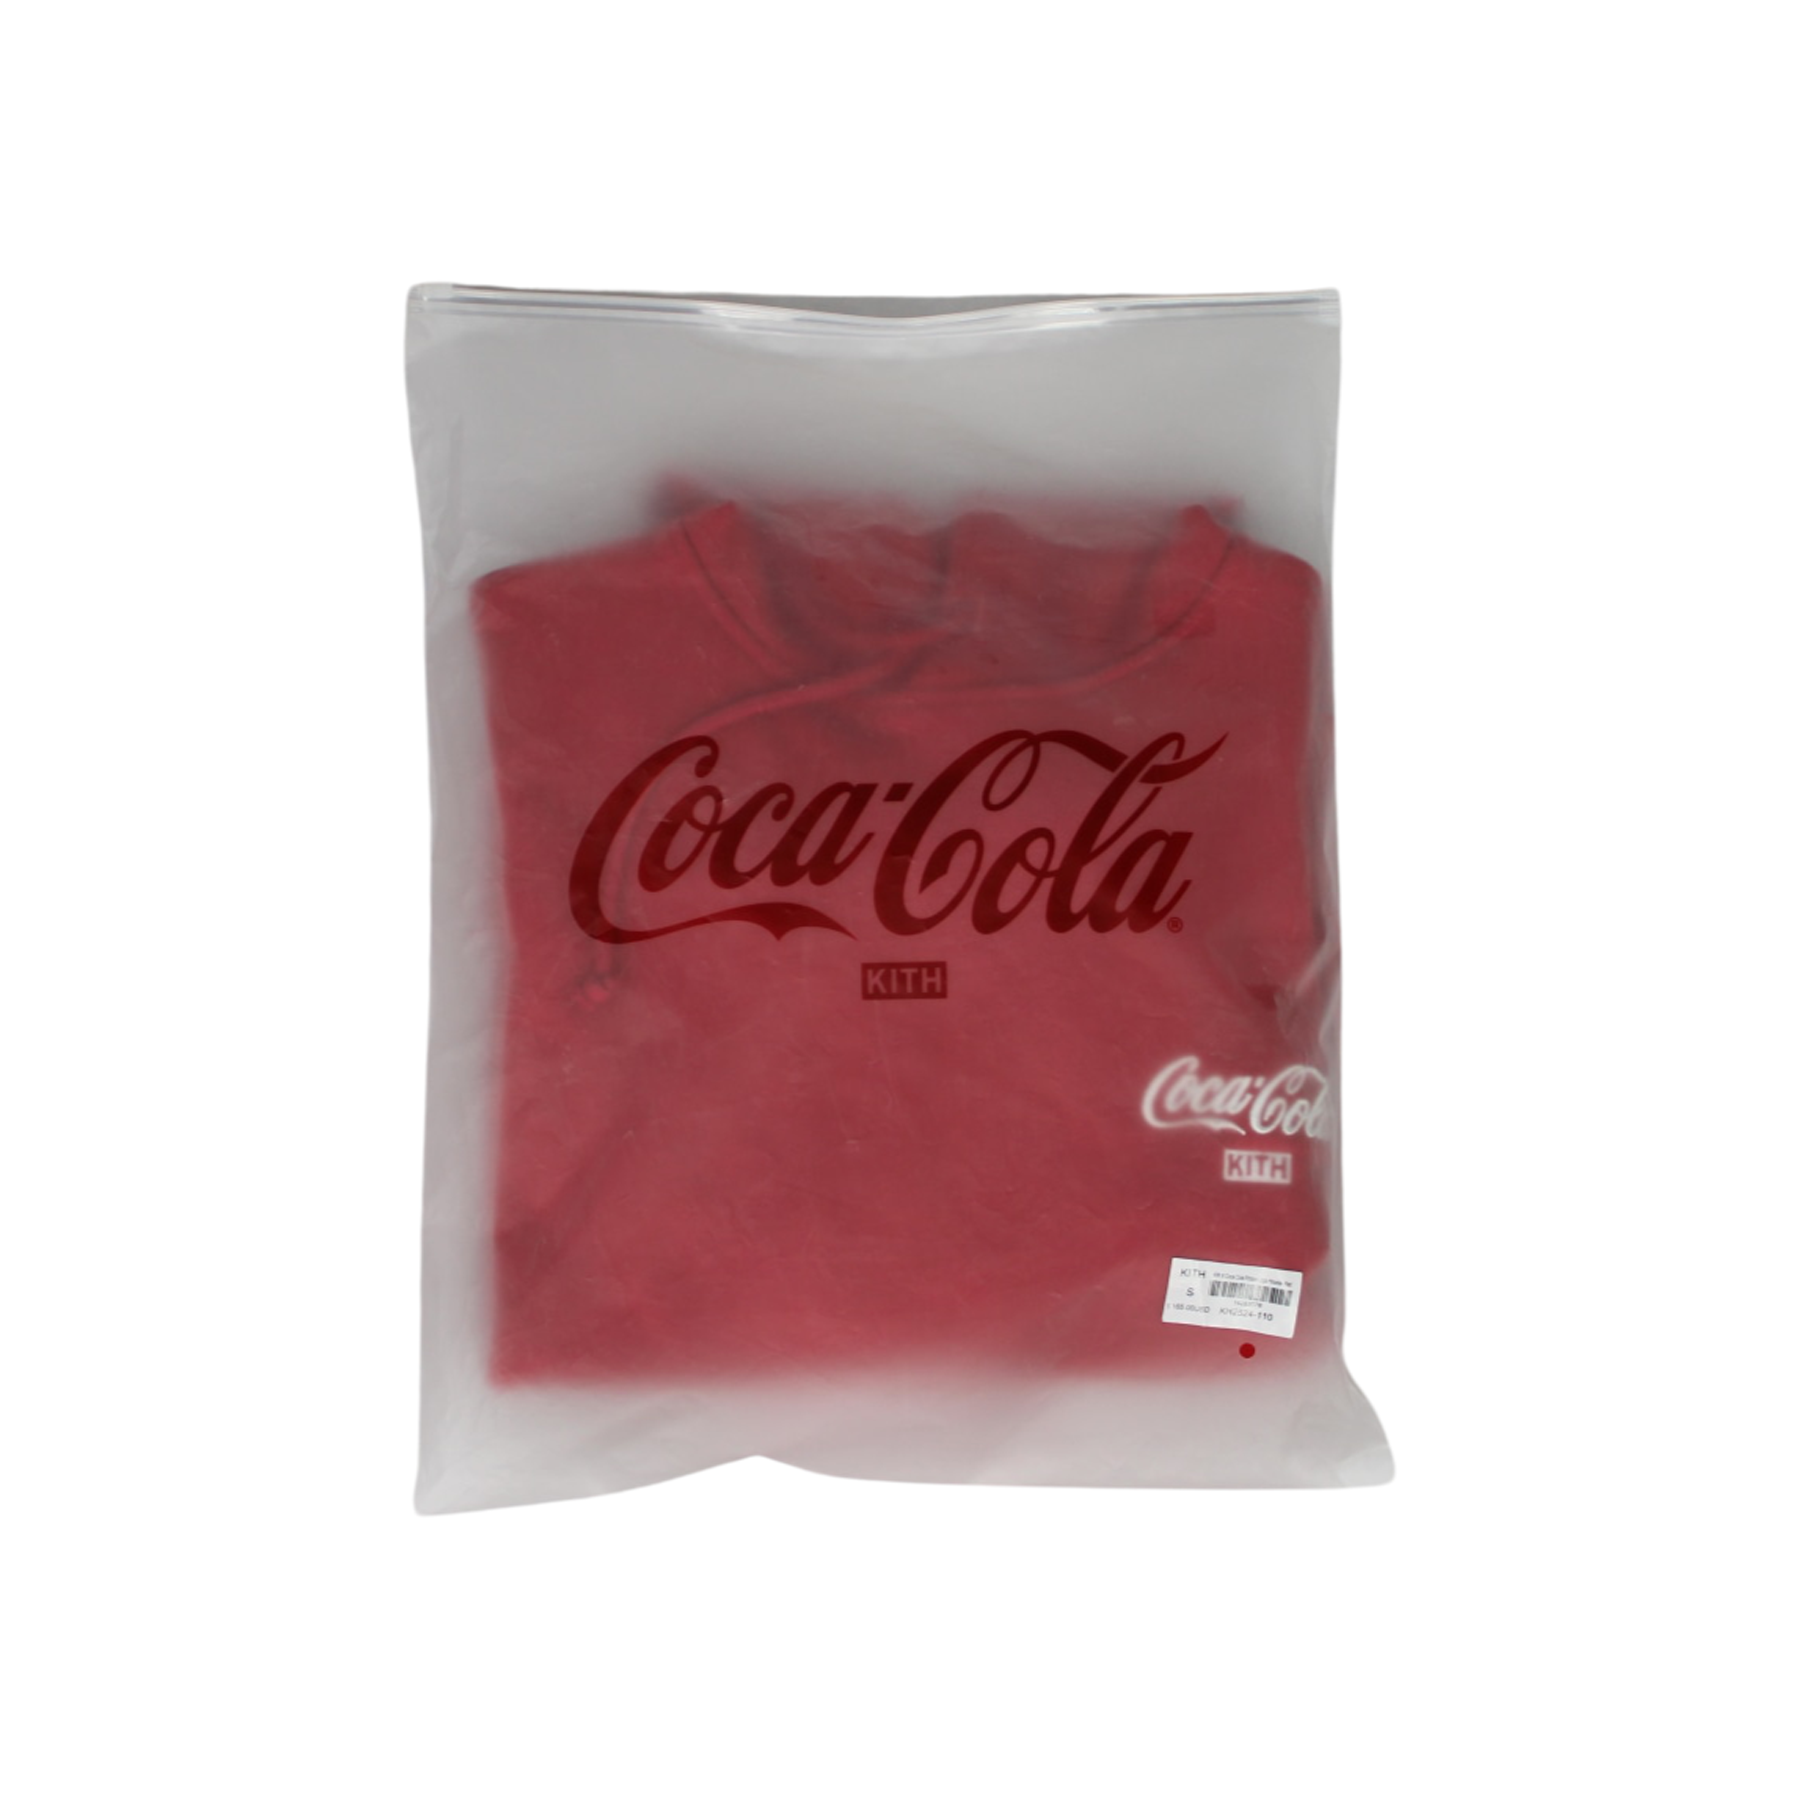 Kith X Coca-Cola Hoodie